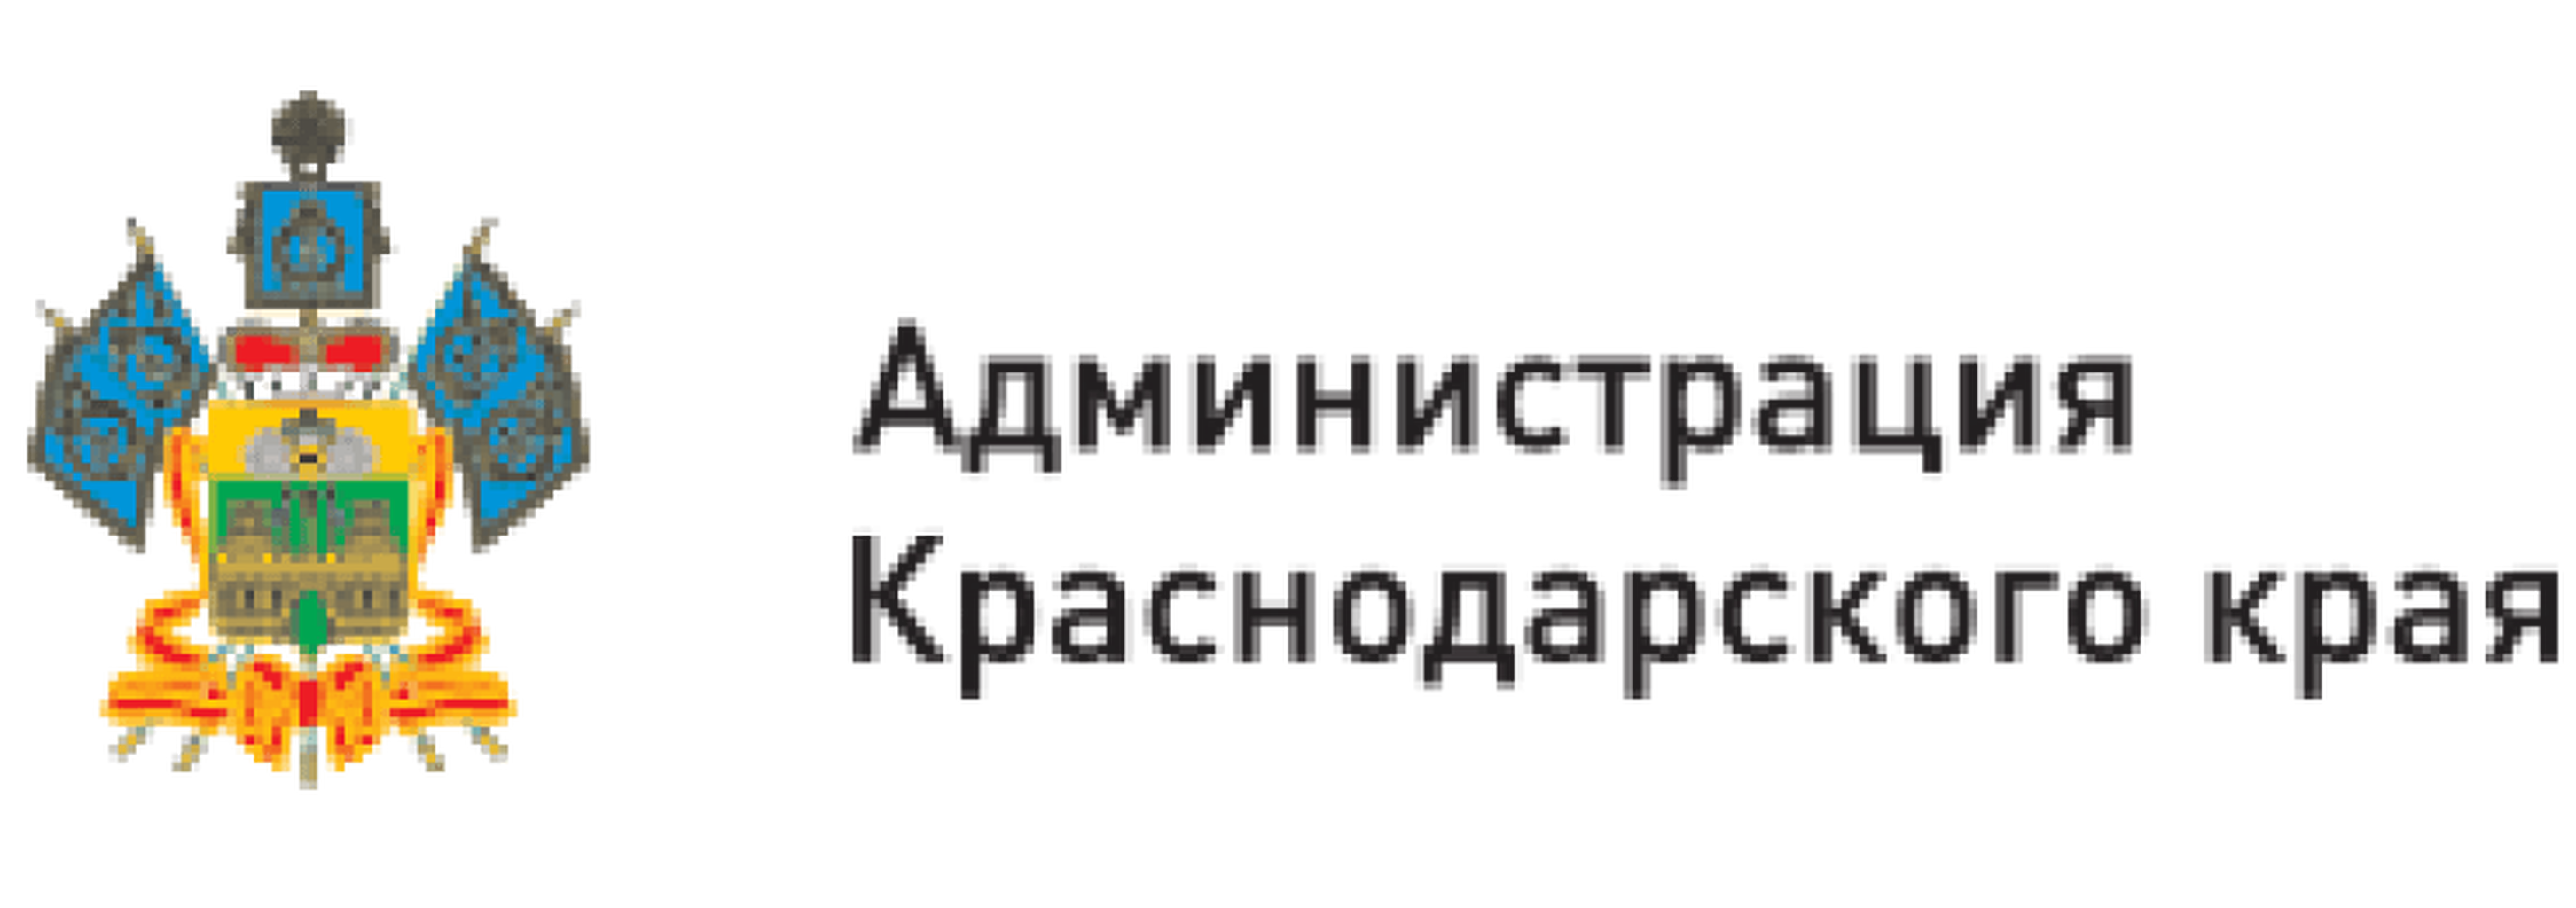 Администрация Краснодарского края лого. Правительство Краснодарского края логотип. Администрация Краснодарского края эмблема.